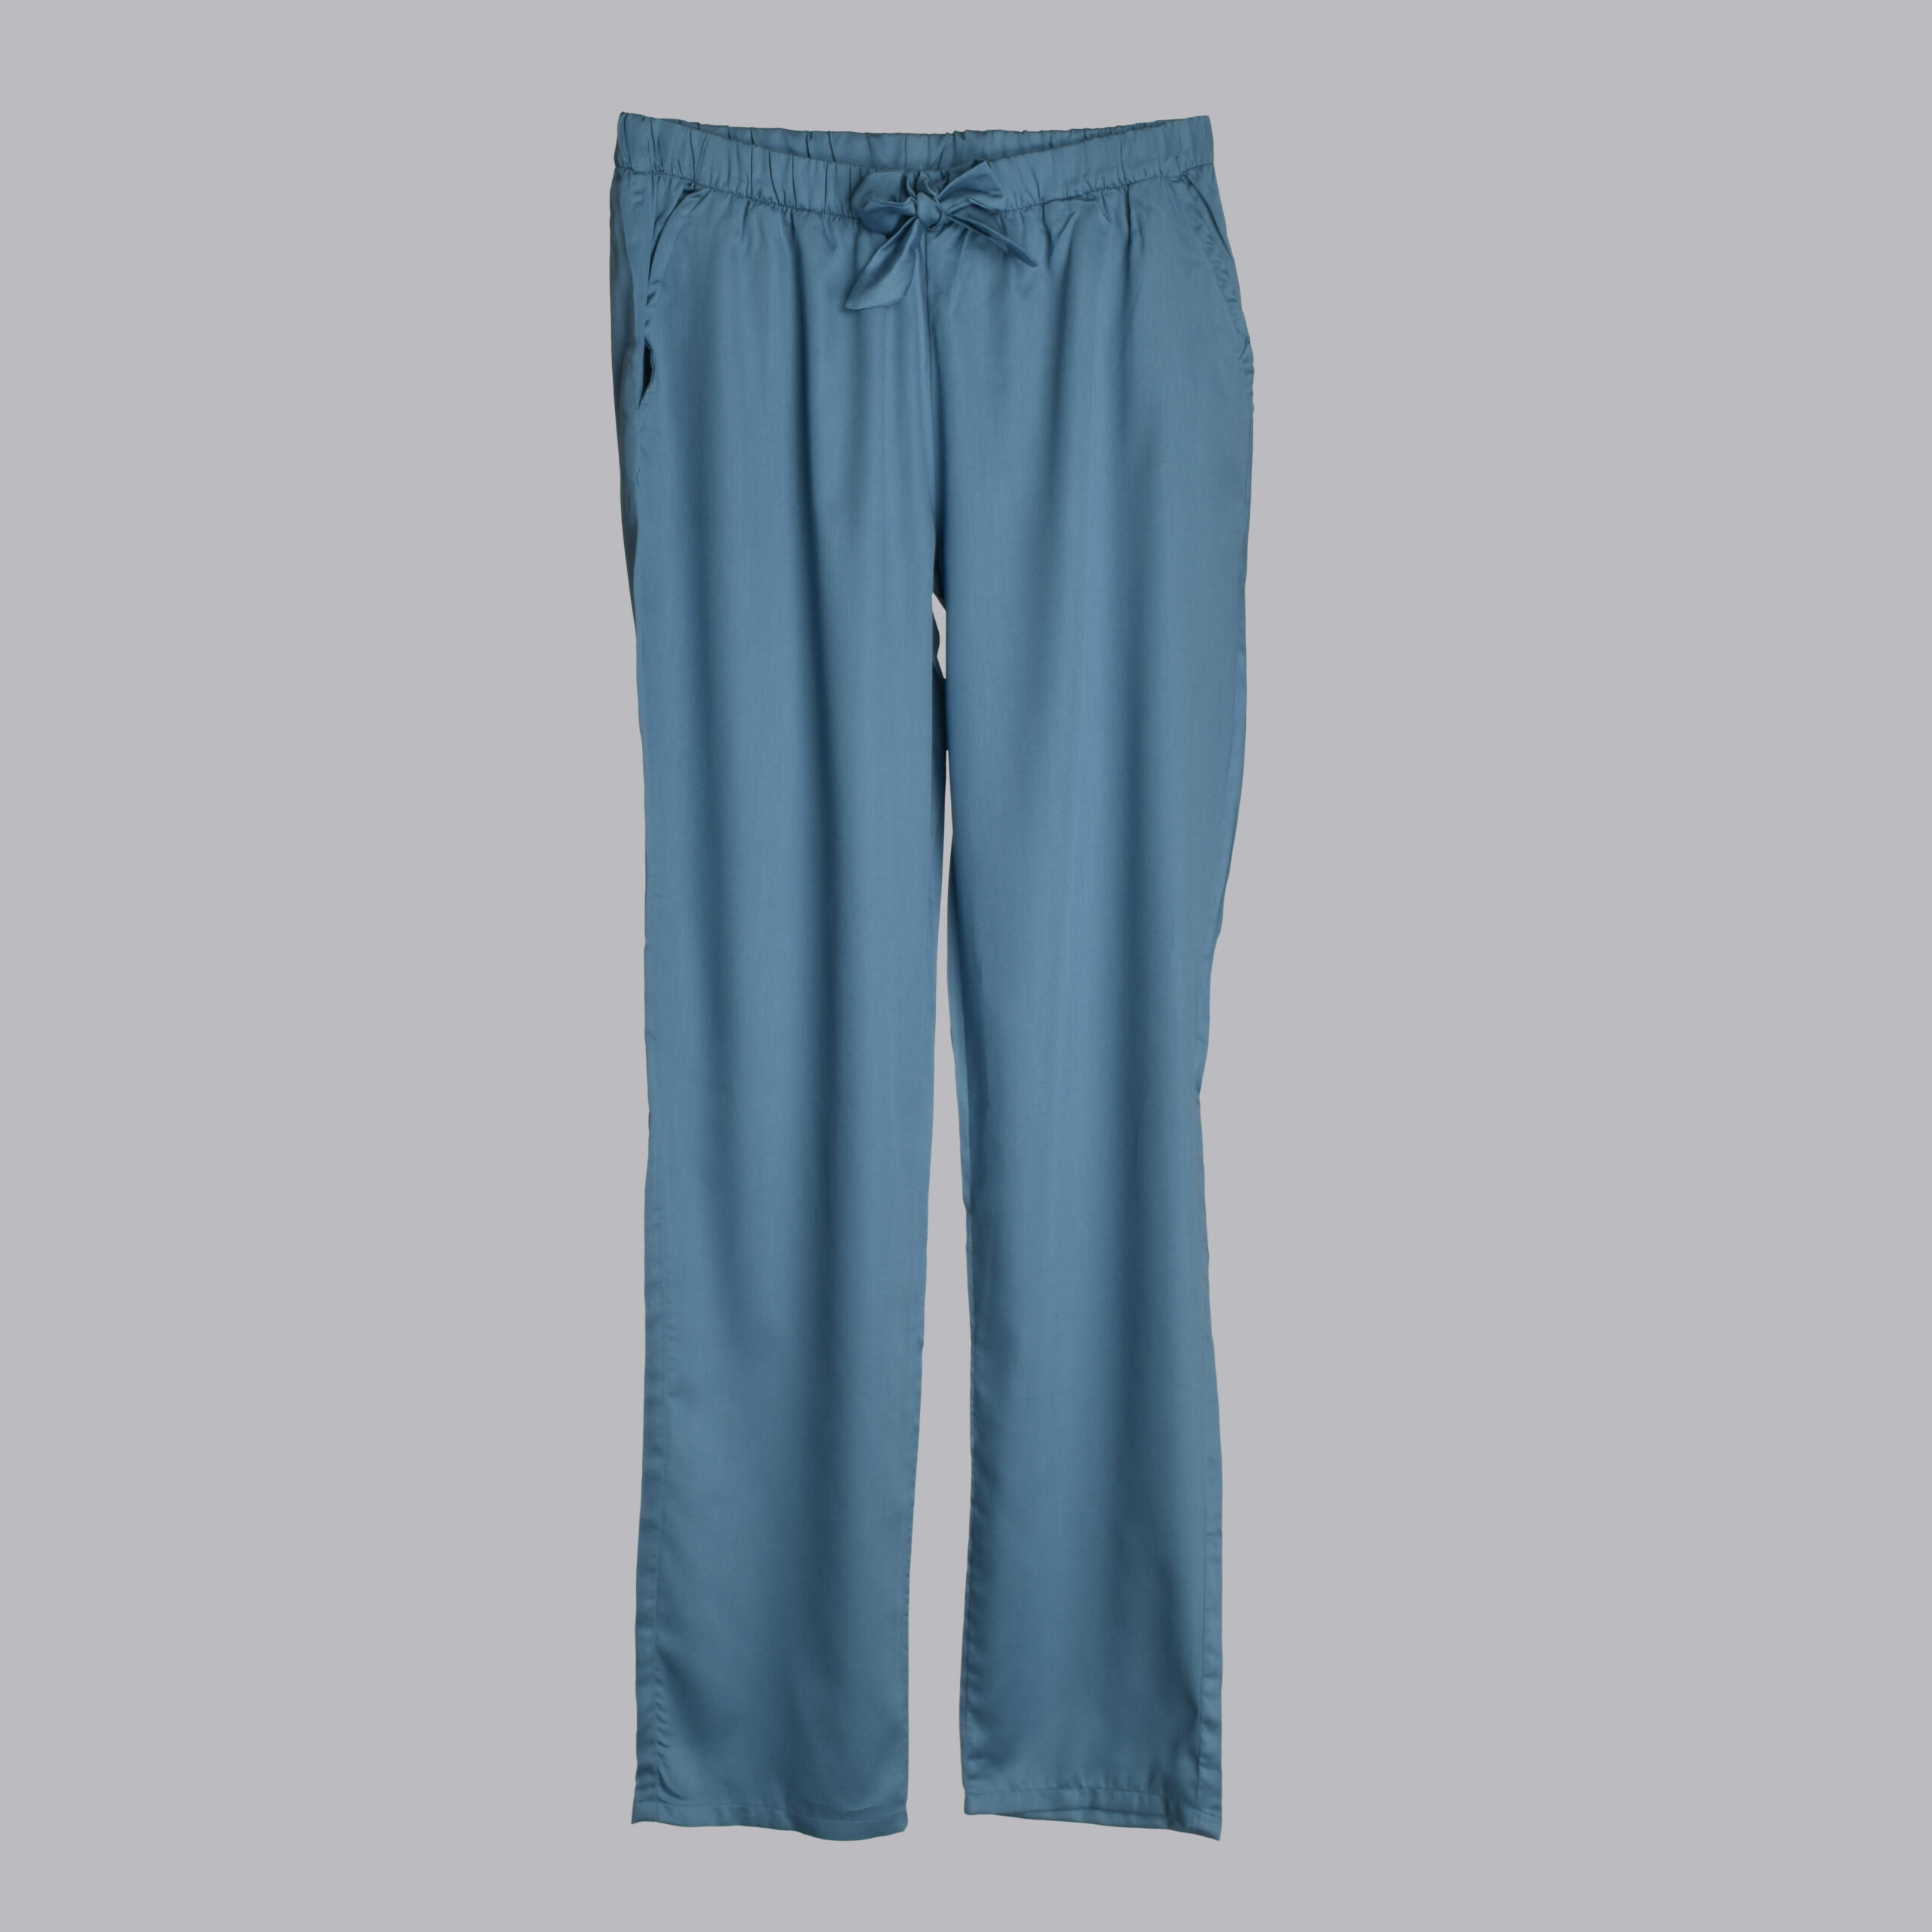 Pantalon de pyjama femme Uni vert satin de coton - Maître Renard